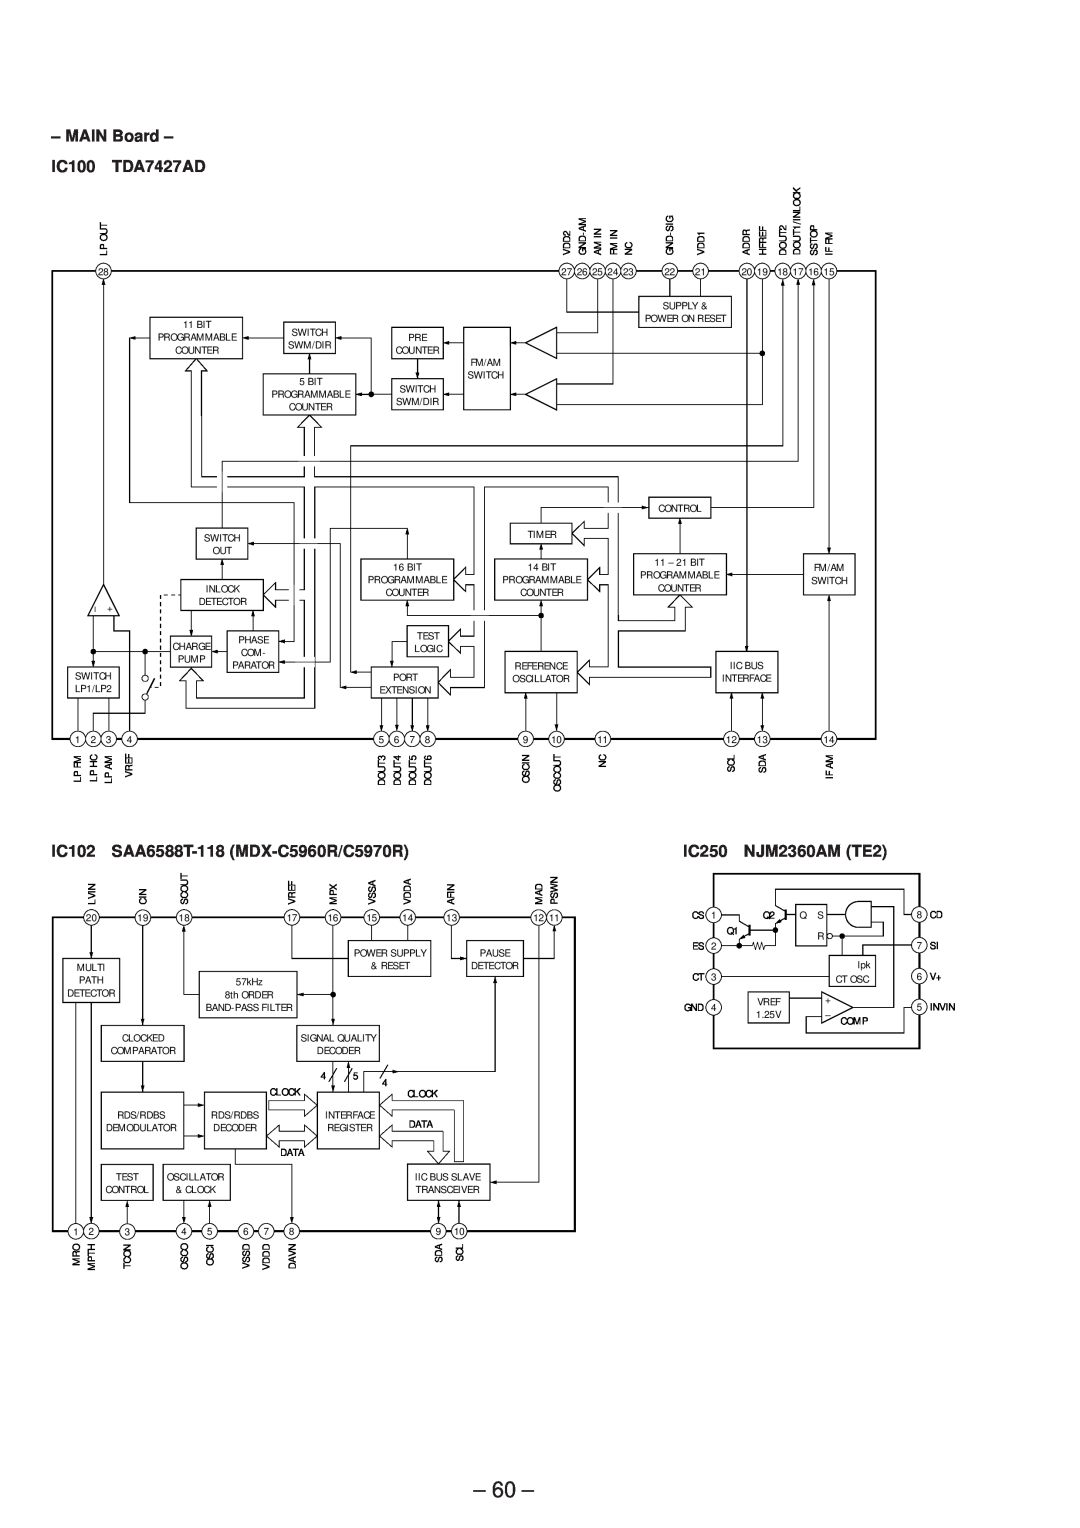 Sony MDX-C5970R IC100, TDA7427AD, IC102, SAA6588T-118 MDX-C5960R/C5970R, IC250, NJM2360AM TE2, MAIN Board 